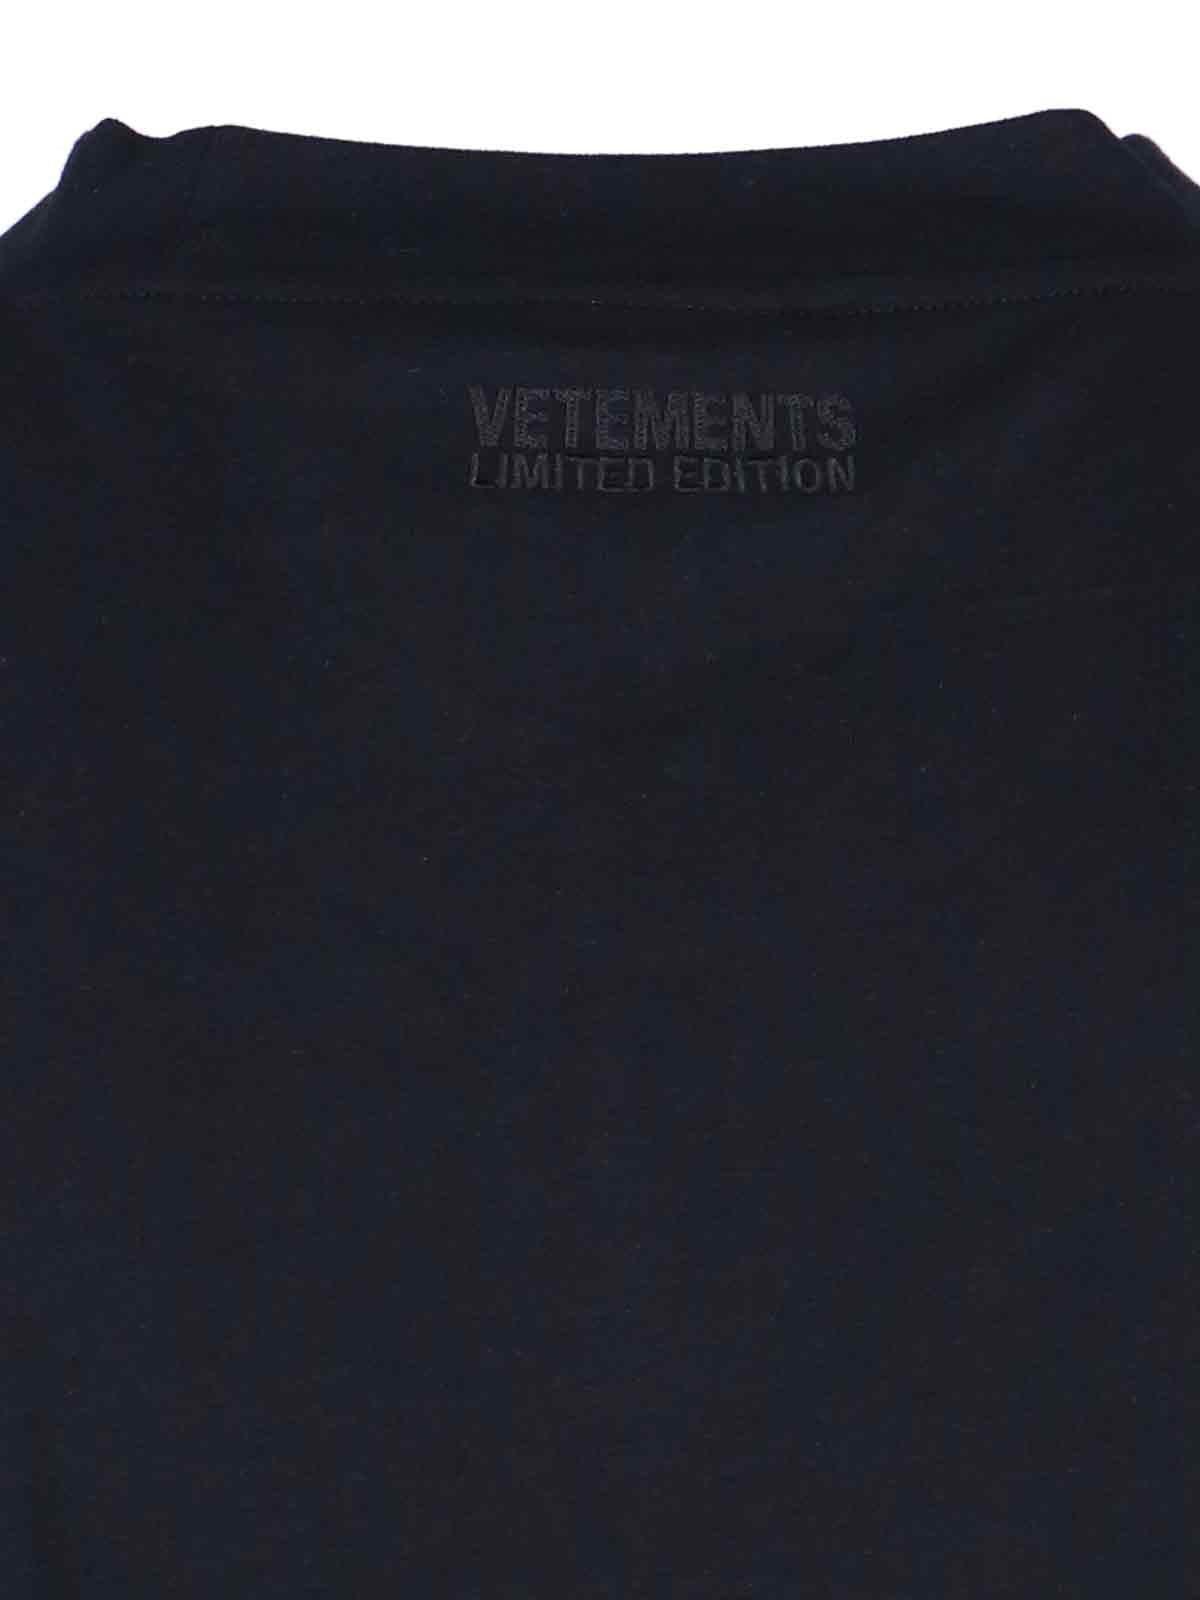 Shop Vetements Medium T-shirt In Nero